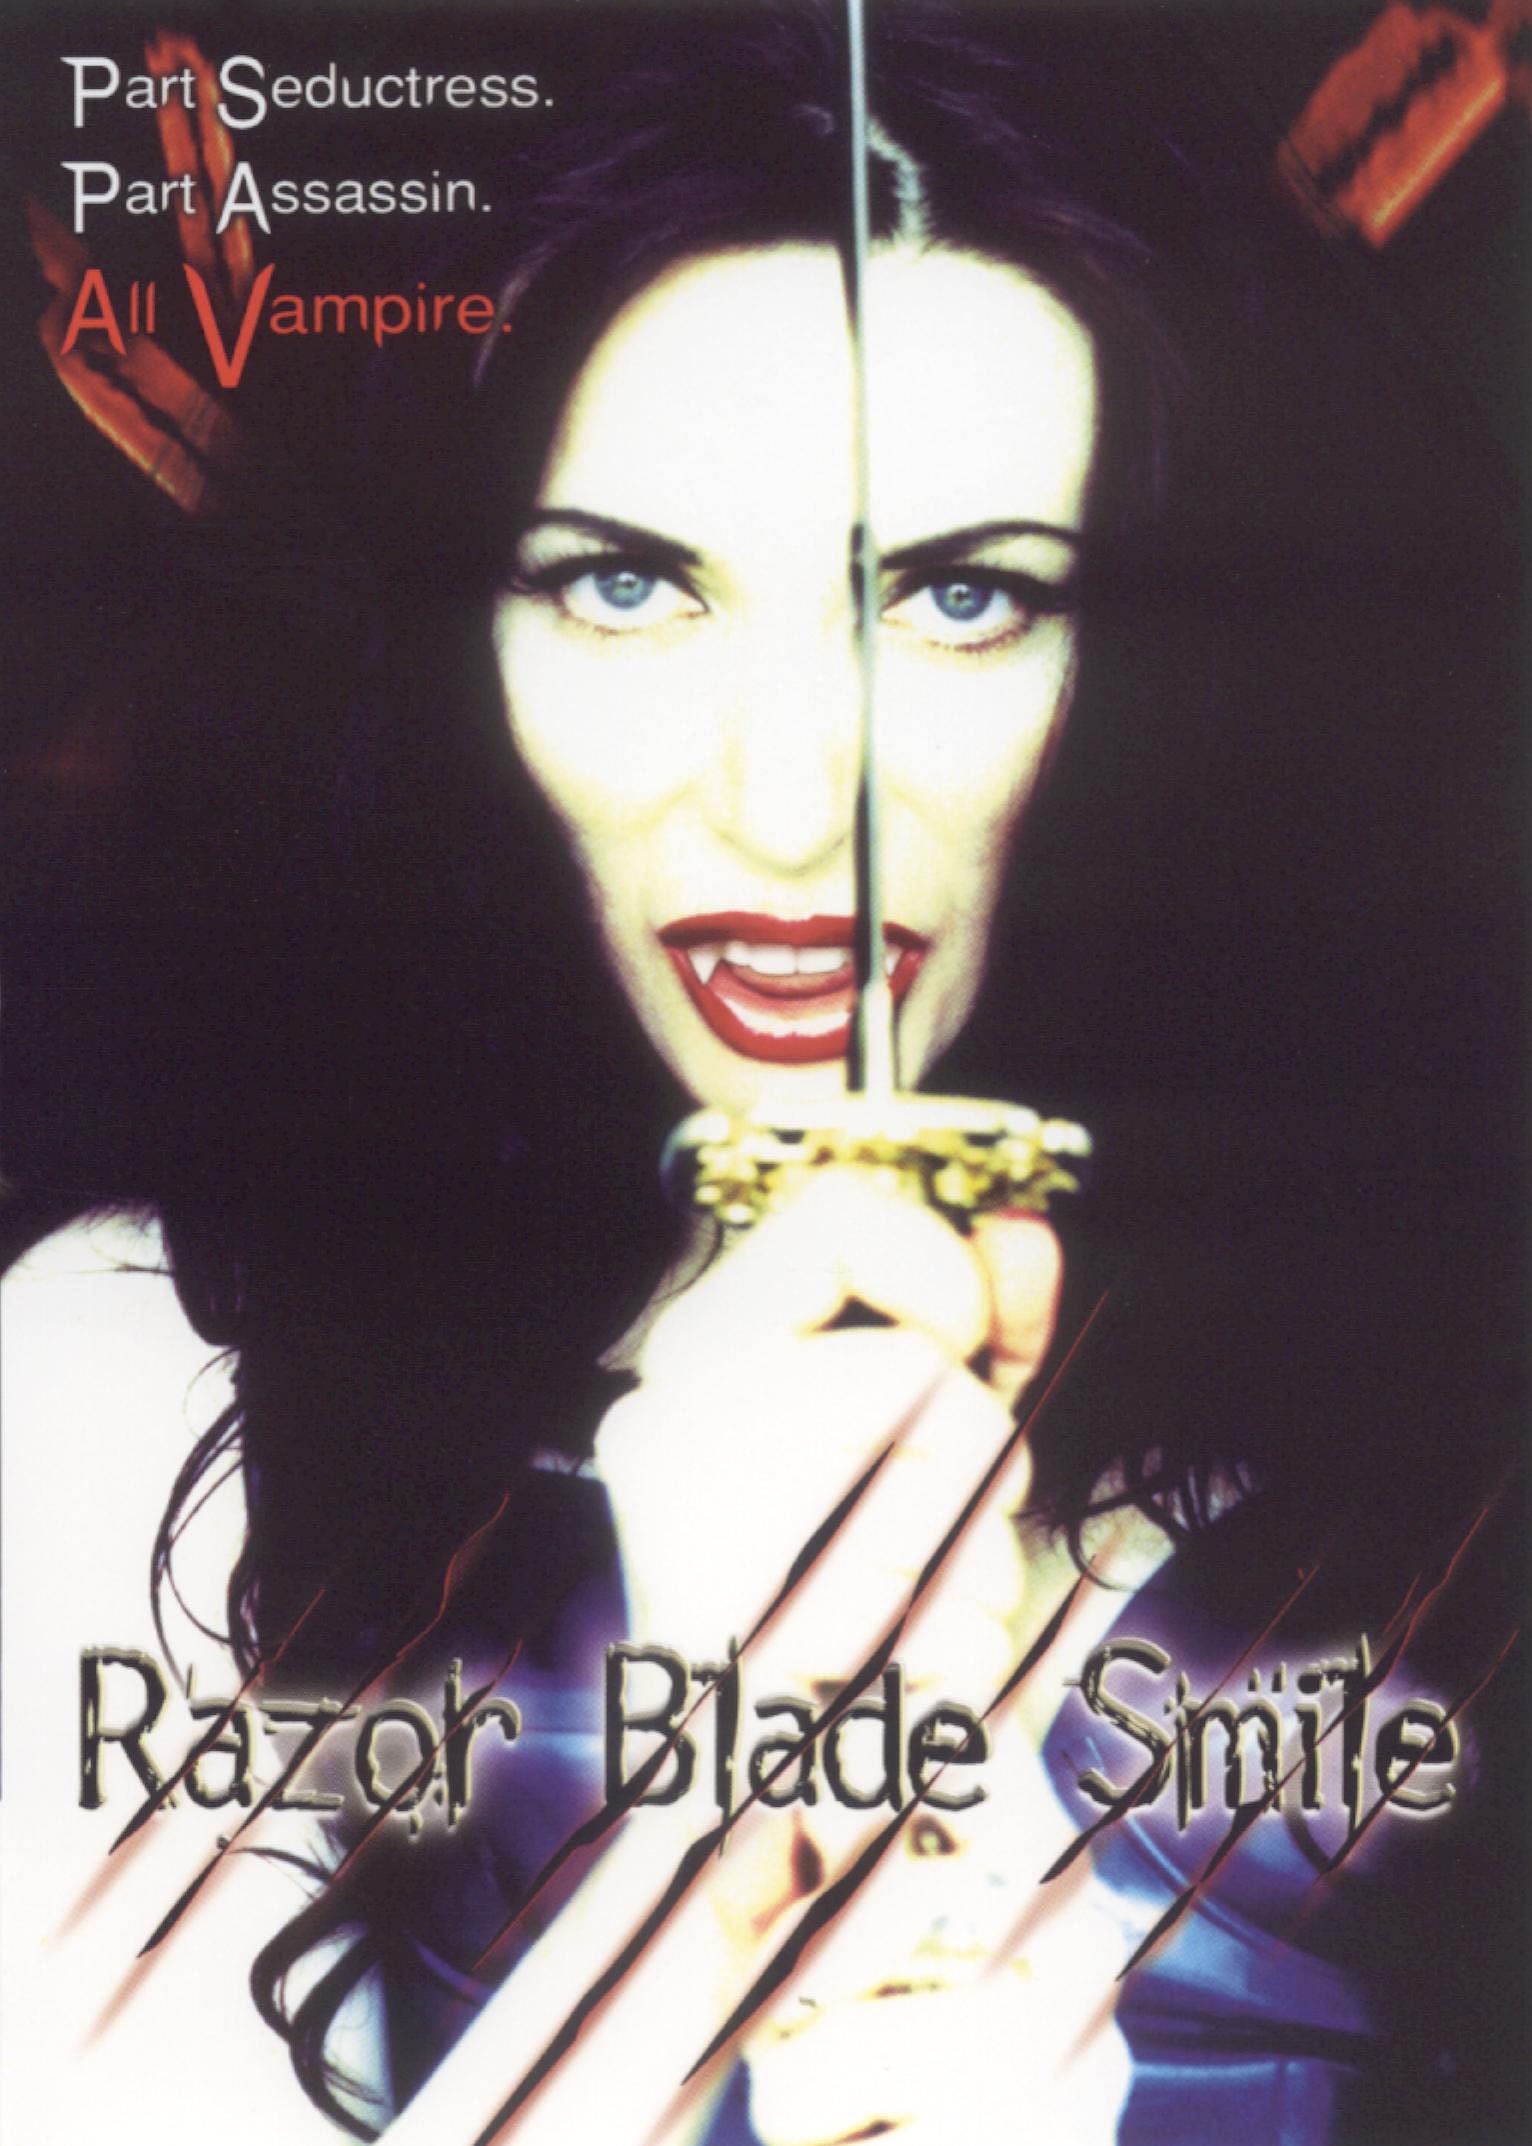 Razor Blade Smile cover art